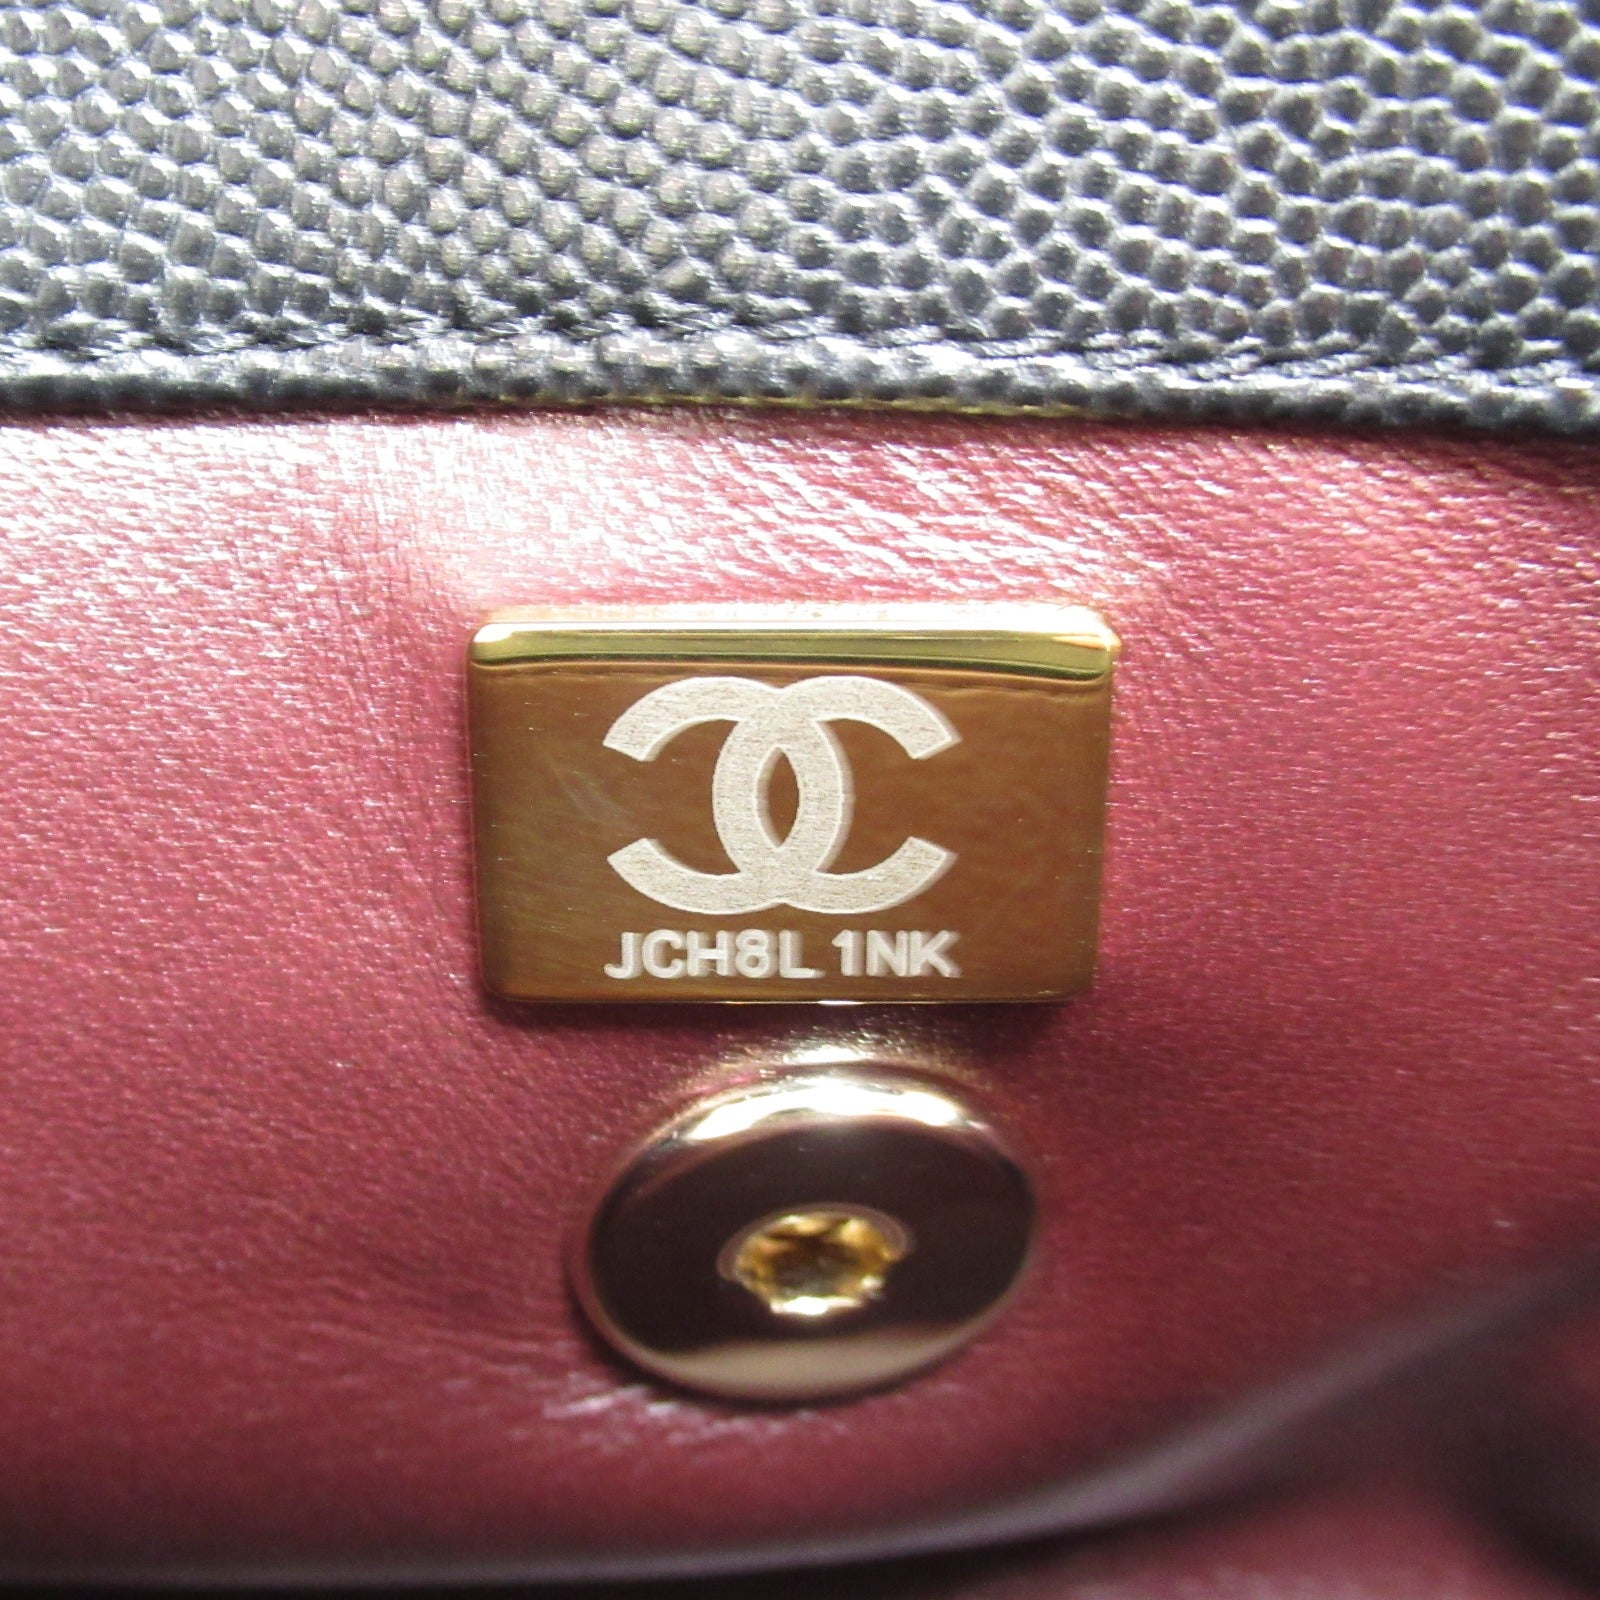 Chanel Coco Handler Matrasse 2w Shoulder 2way Shoulder Bag Caviar S  Black A92990